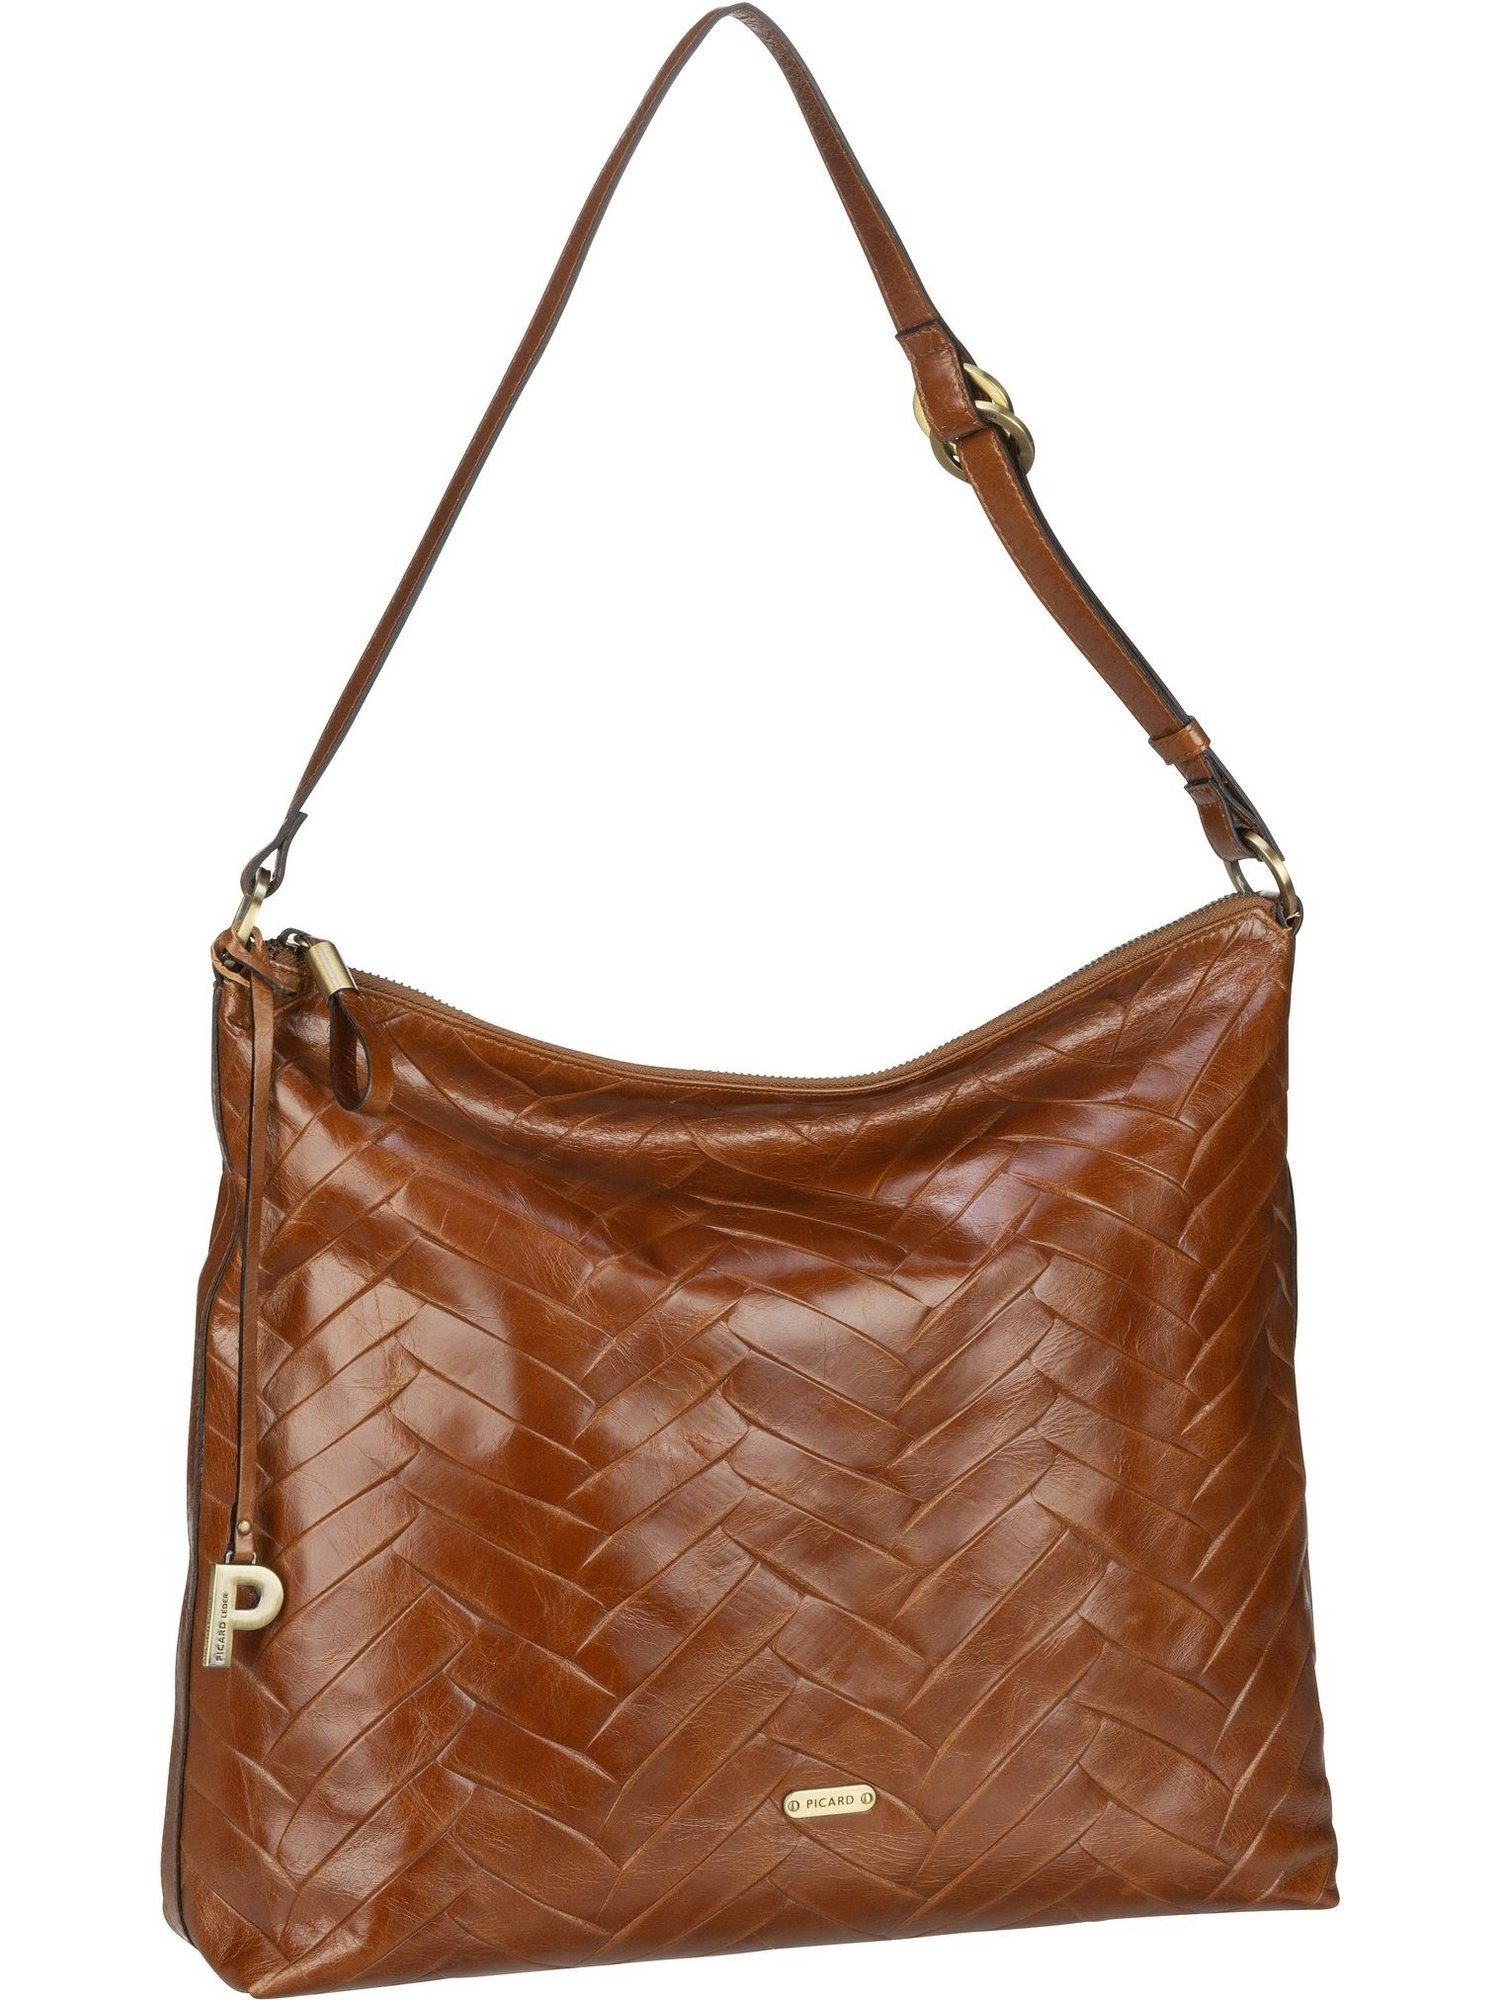 Damen Handtaschen Picard Handtasche Basket 5285, Beuteltasche / Hobo Bag